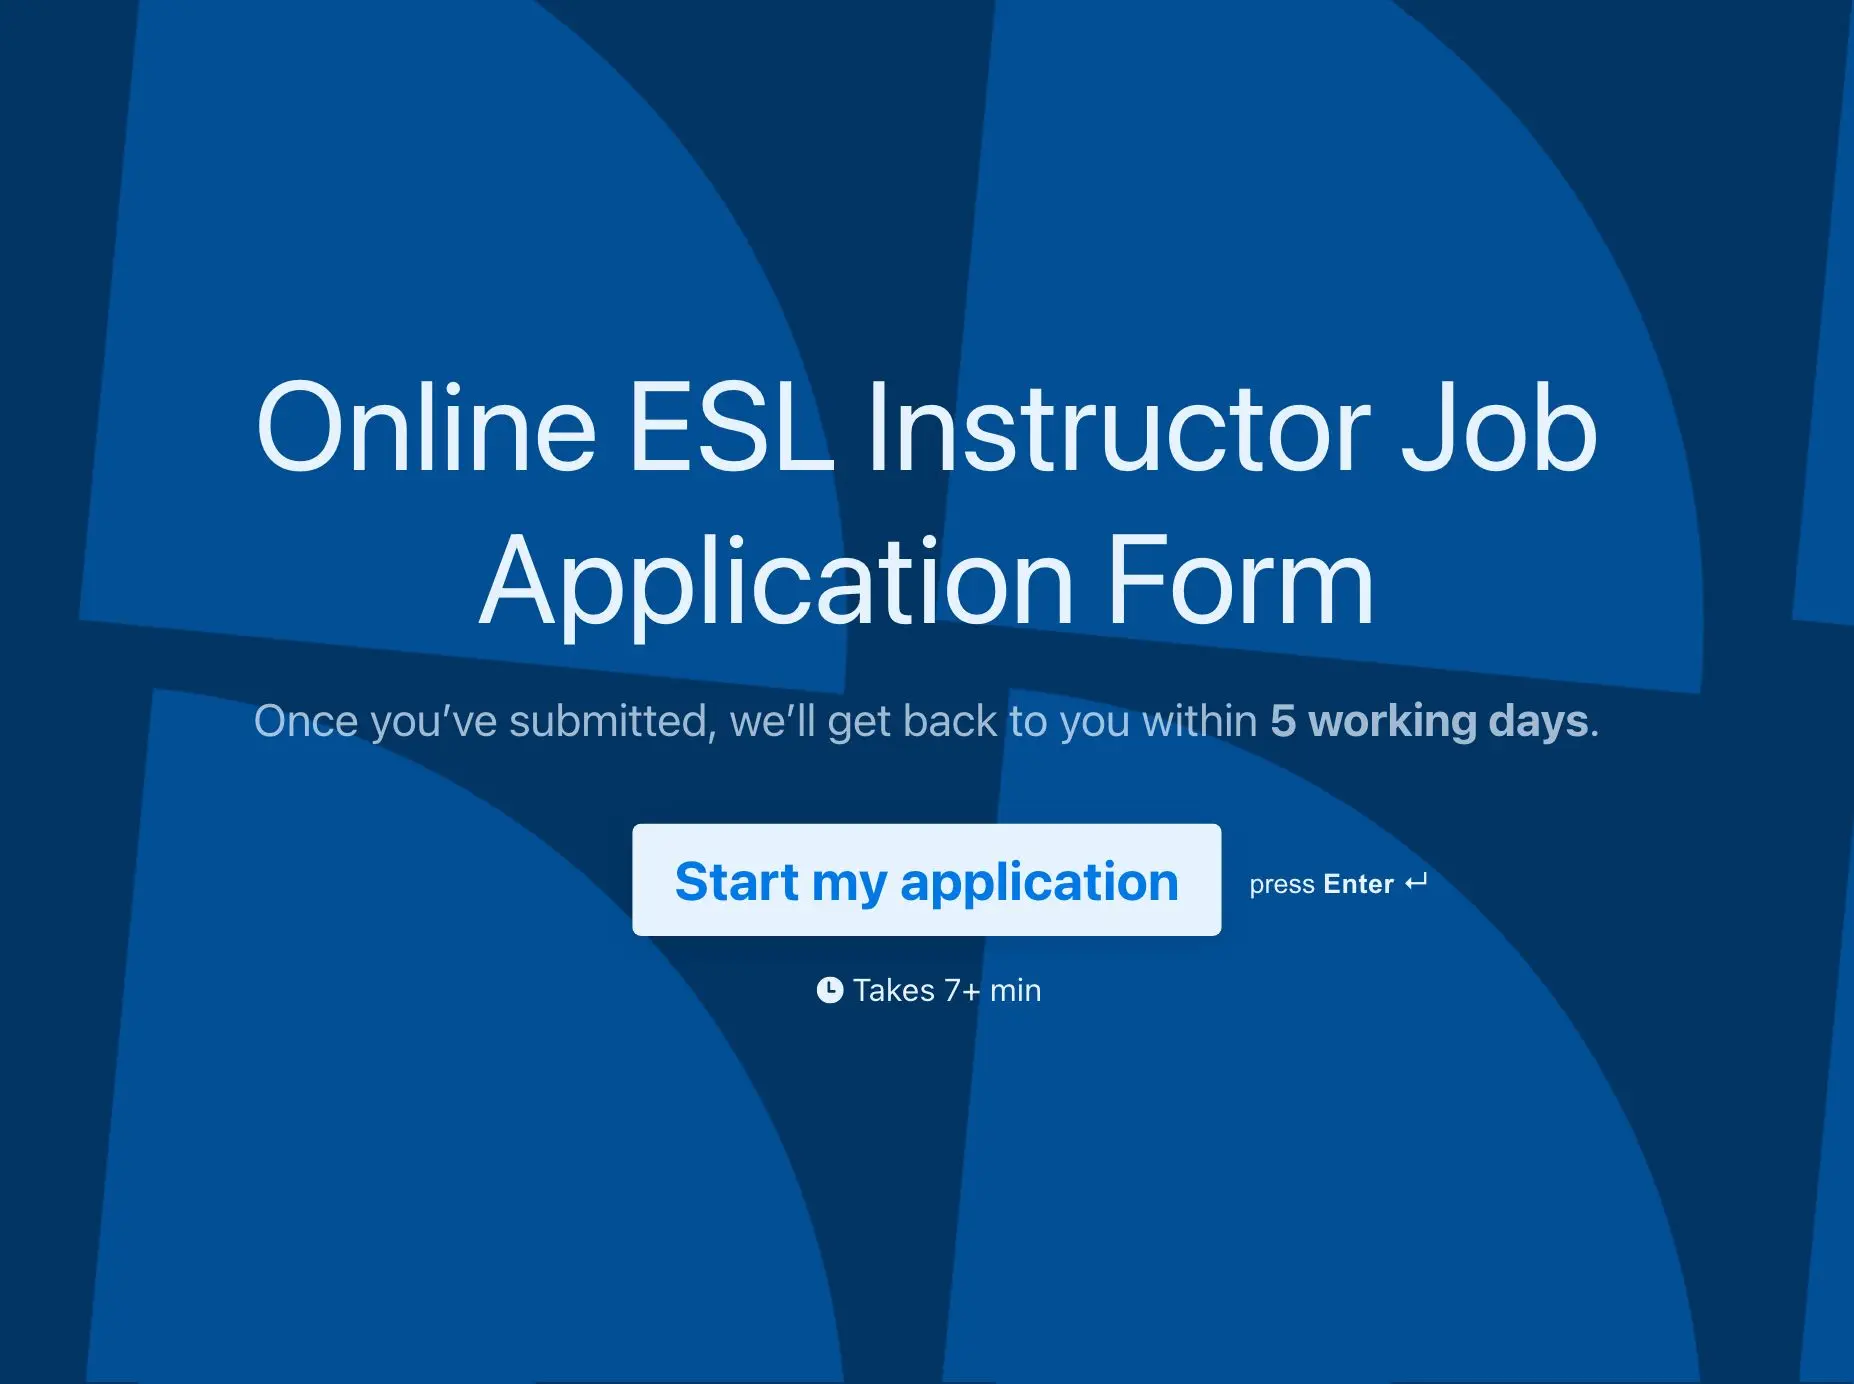 Online ESL Instructor Job Application Form Template Hero